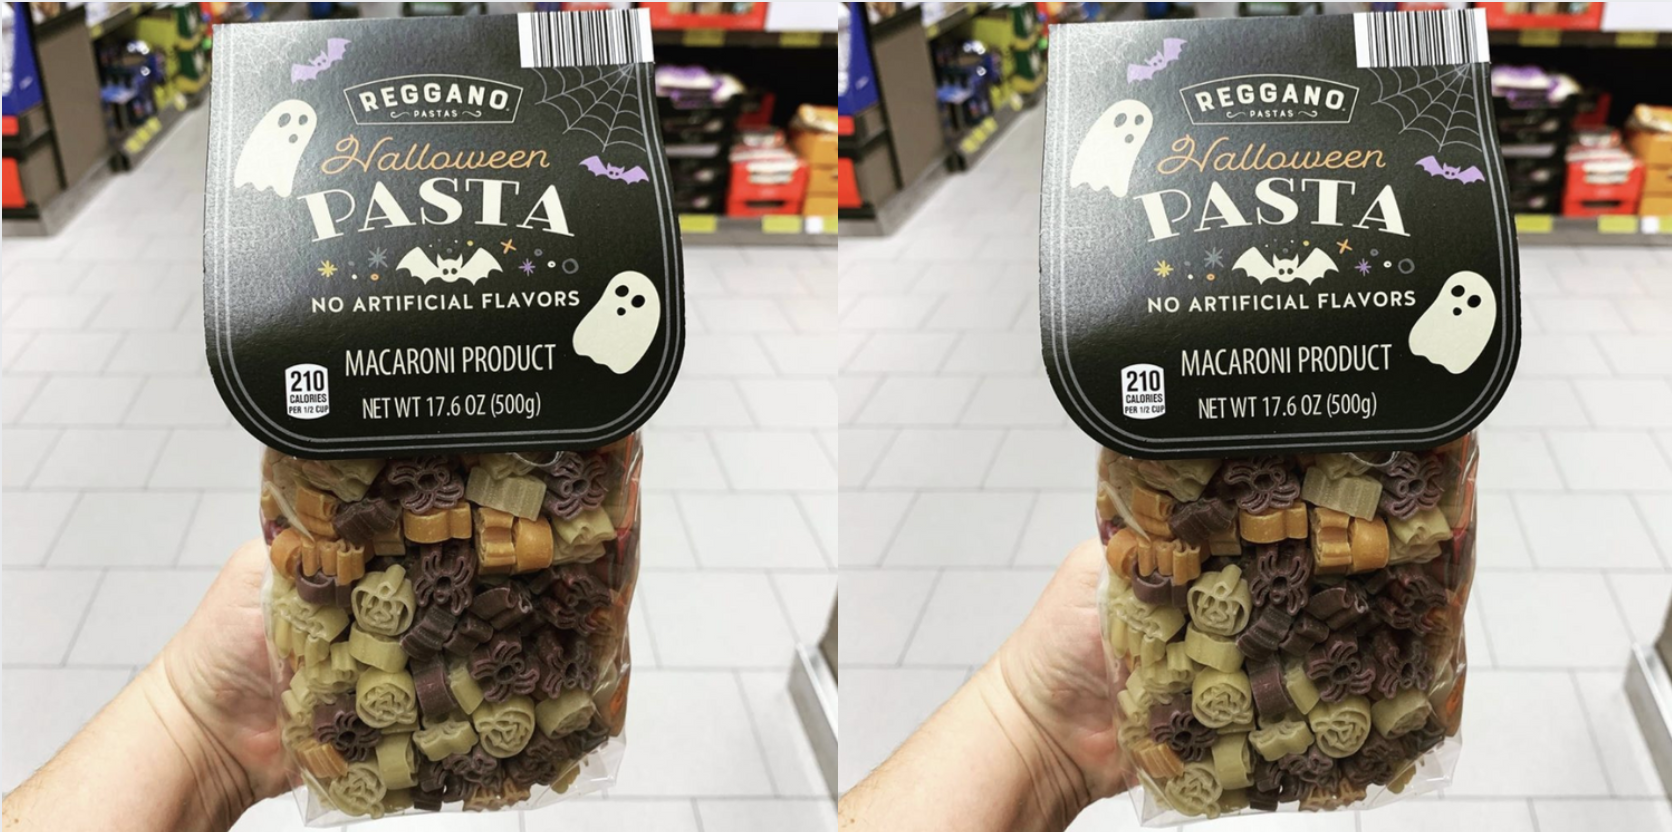 Aldi Is Selling Halloween-Shaped Pasta